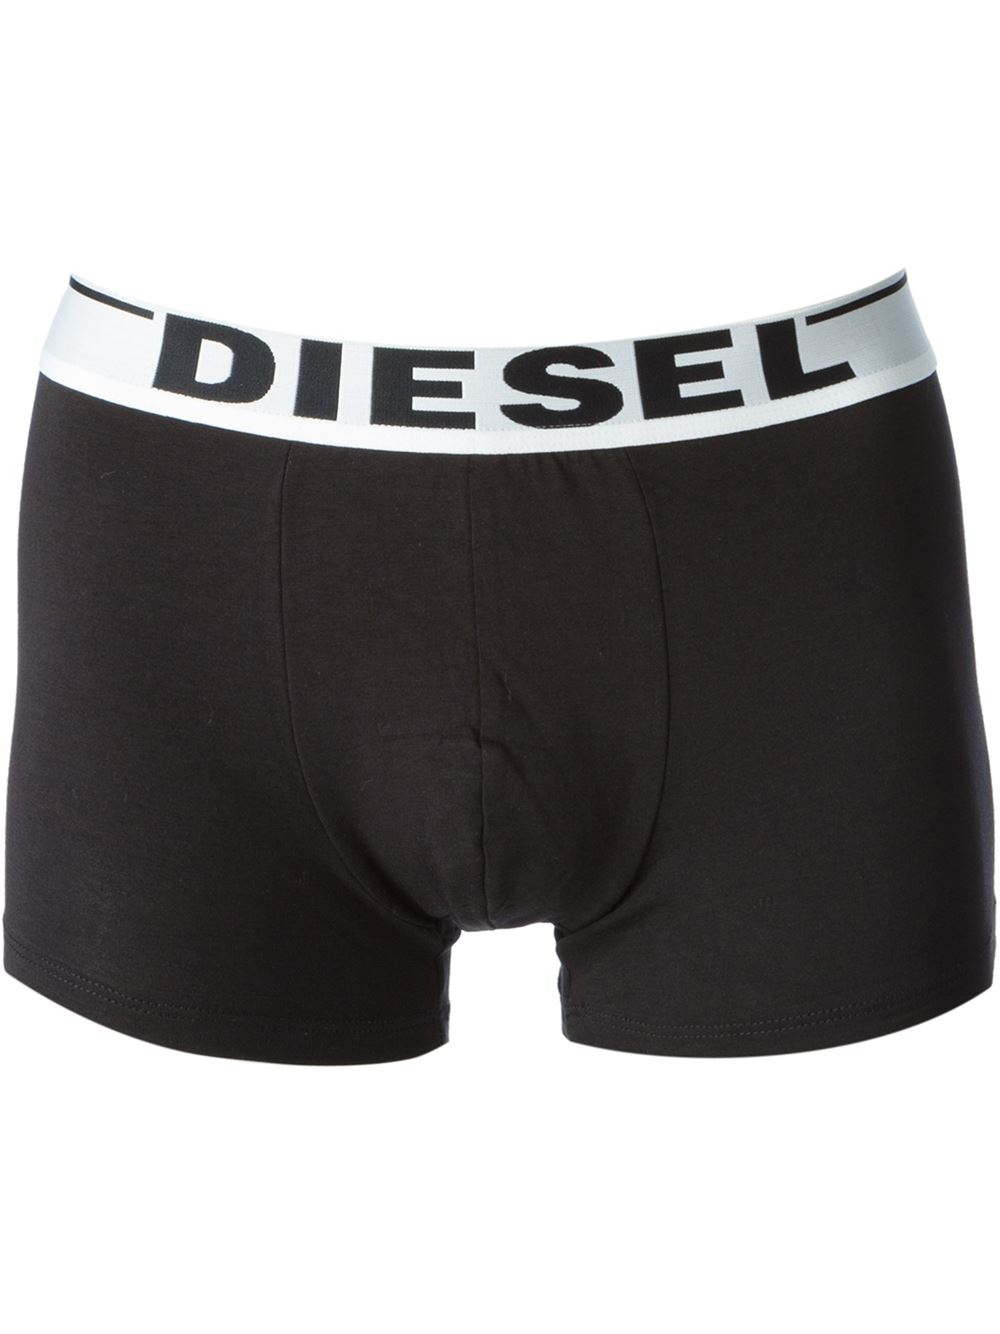 Lyst - Diesel Umbx-Rocco Boxers in Black for Men